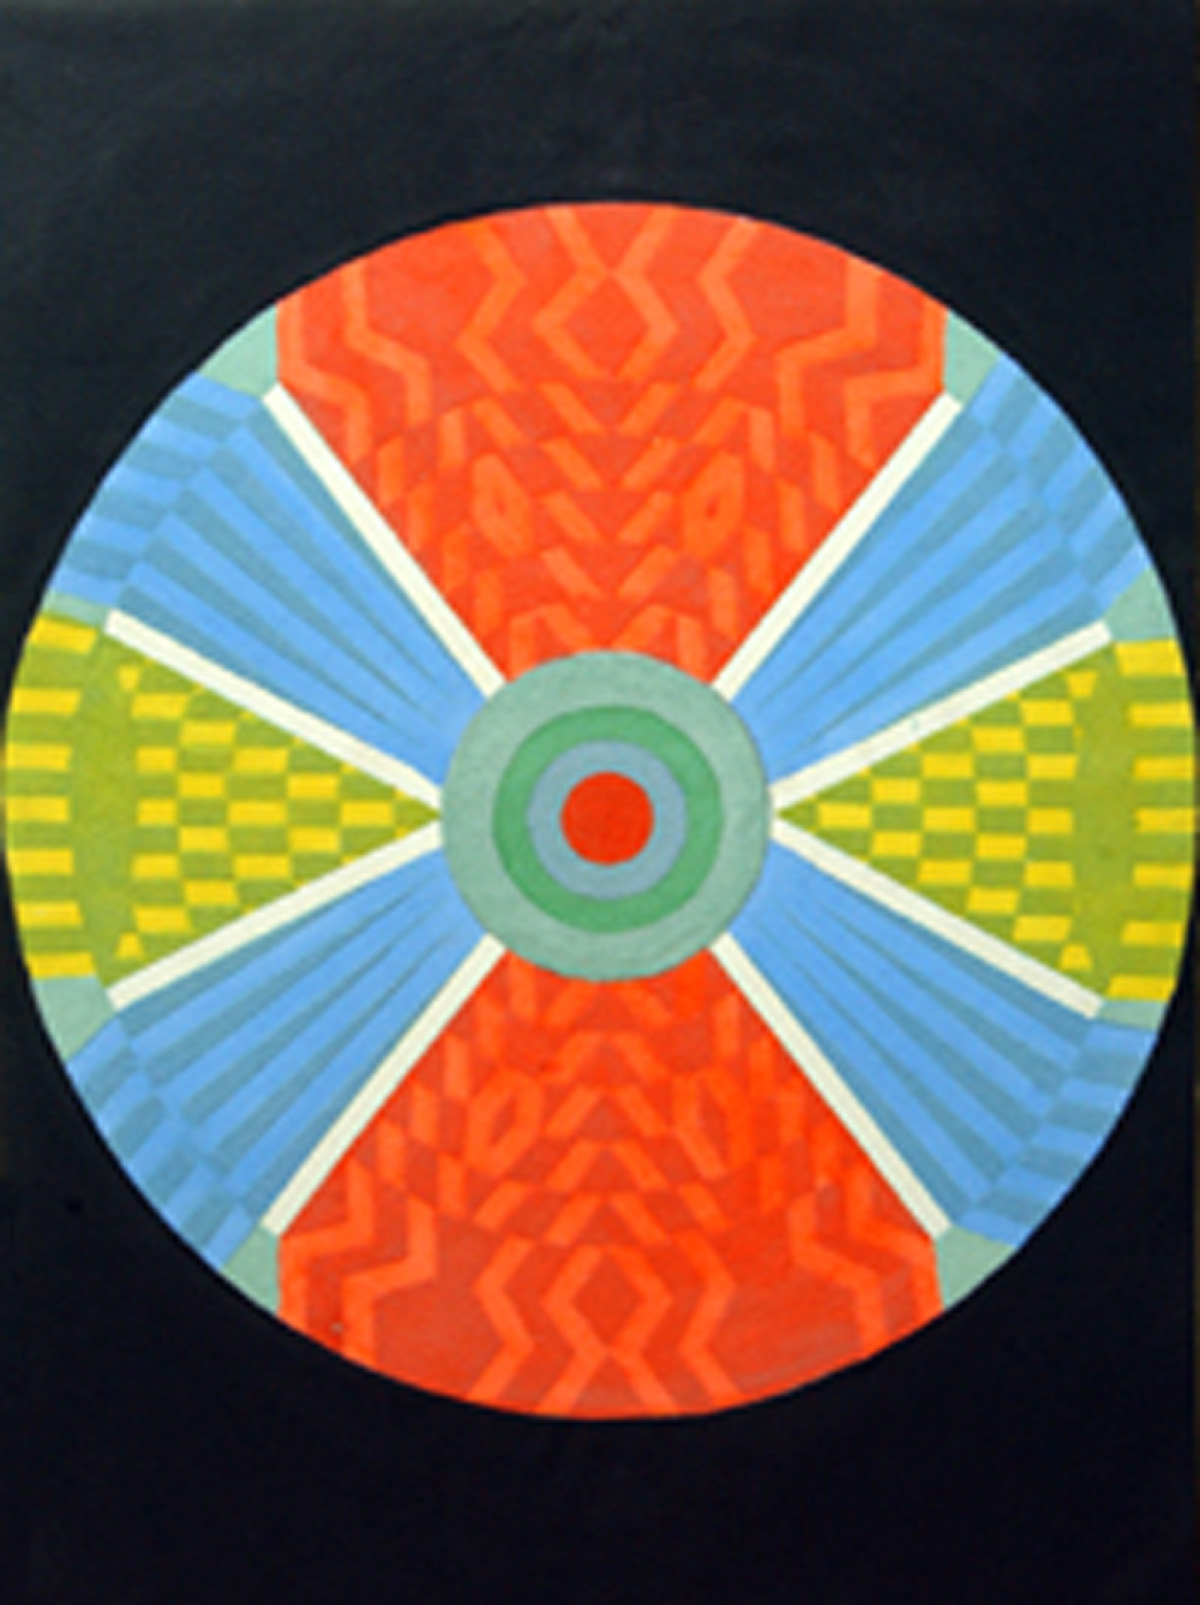 Ediva Ramosa, Mandala<a style='float:right;color:#ccc' href='https://www3.al.sp.gov.br/repositorio/noticia/06-2008/Ediva Ramosa Mandala.jpg' target=_blank><i class='bi bi-zoom-in'></i> Clique para ver a imagem </a>